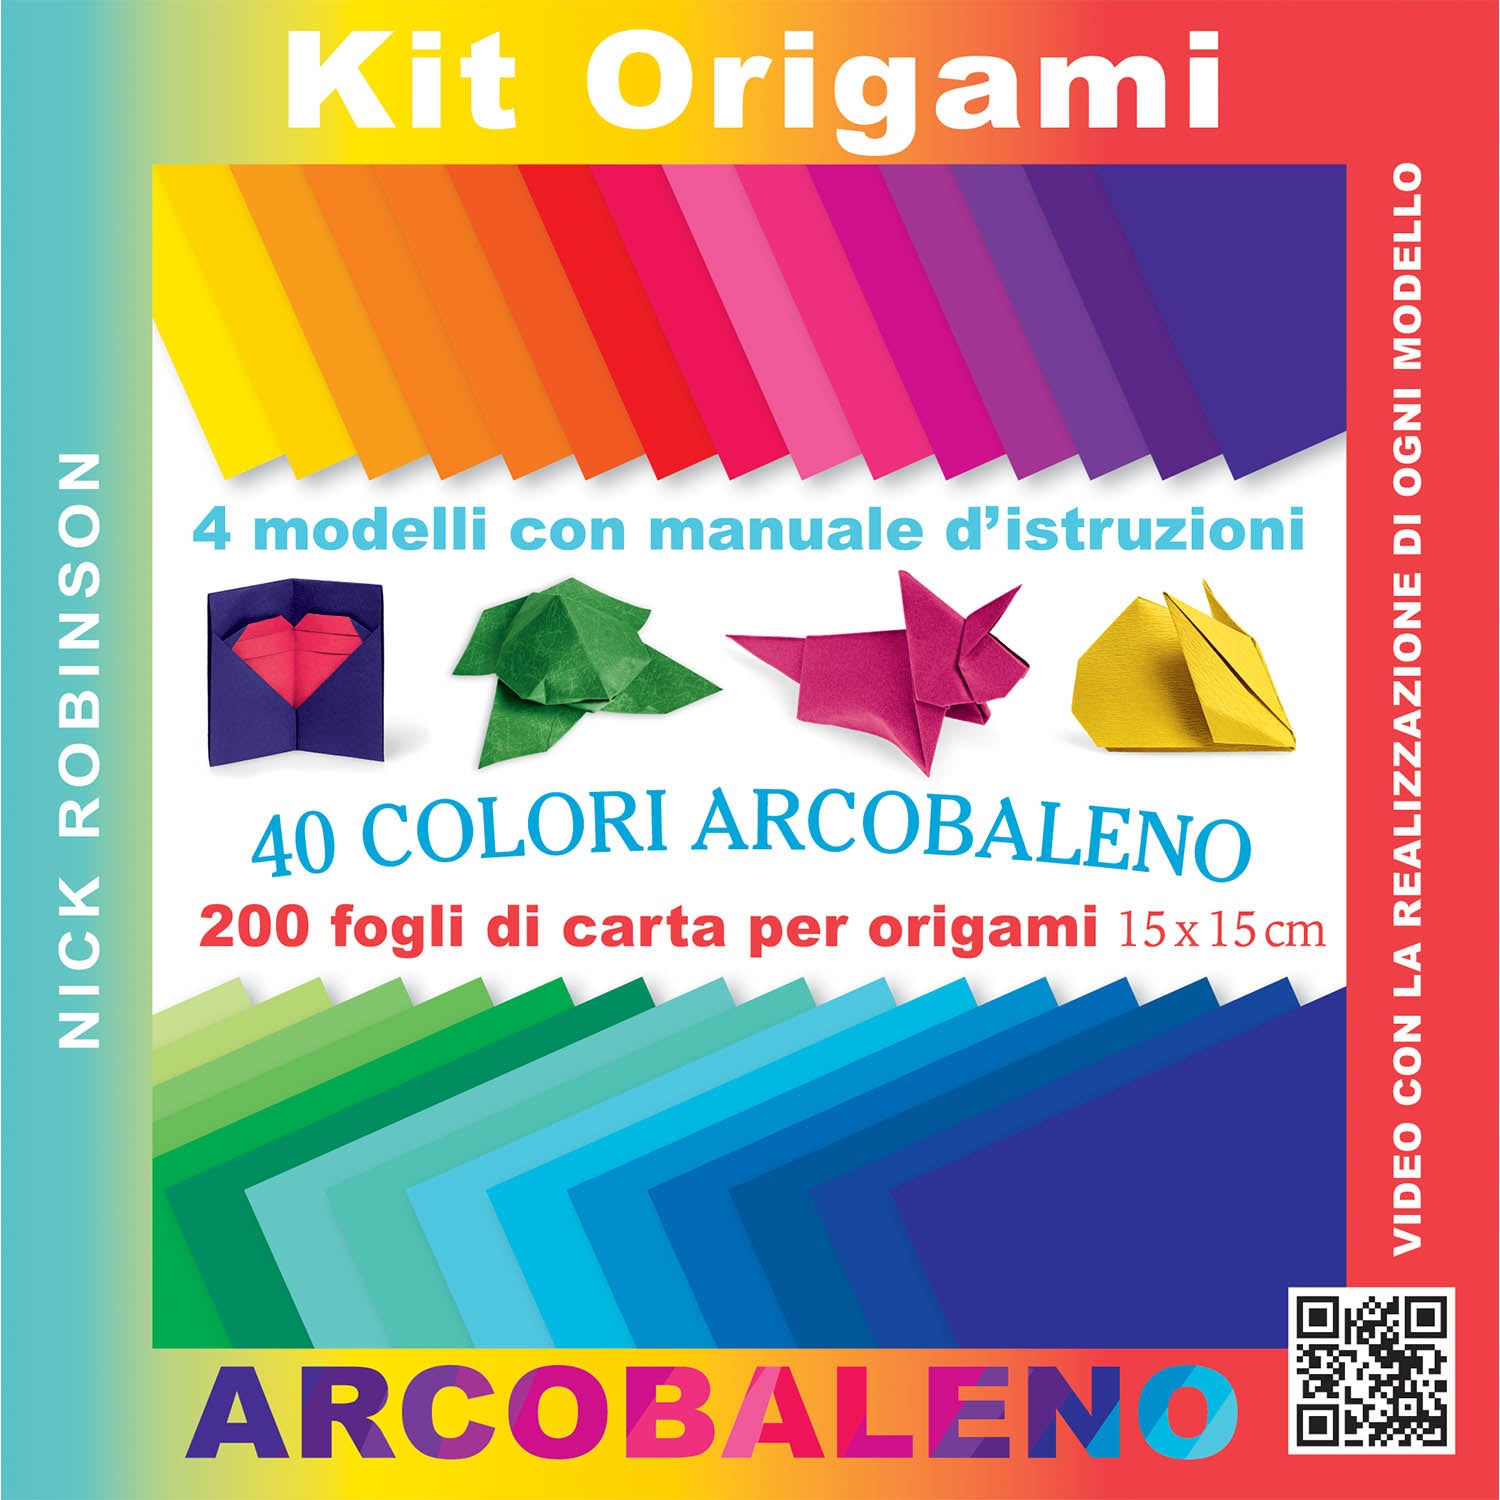 Kit origami - 40 colori arcobaleno